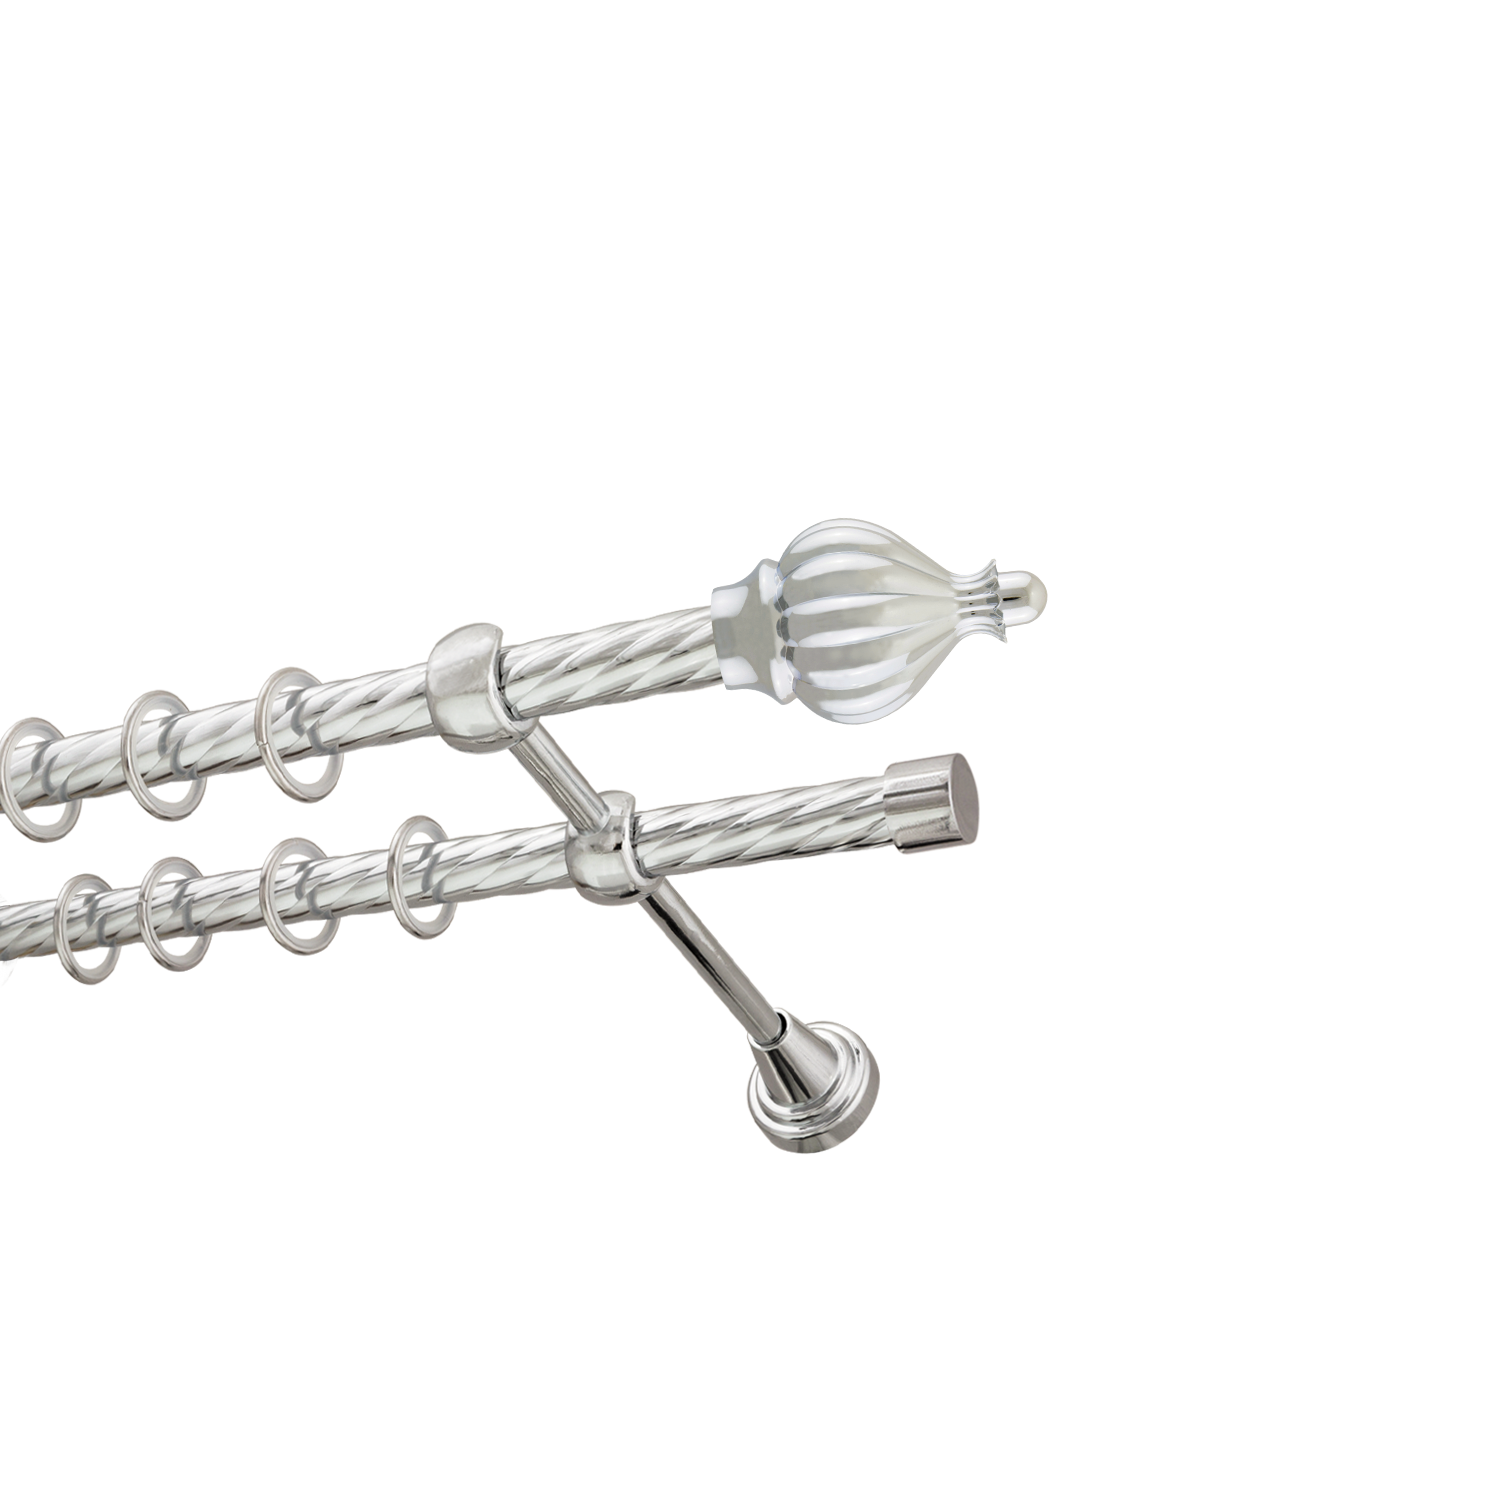 Металлический карниз для штор Афродита, двухрядный 16/16 мм, серебро, витая штанга, длина 160 см - фото Wikidecor.ru